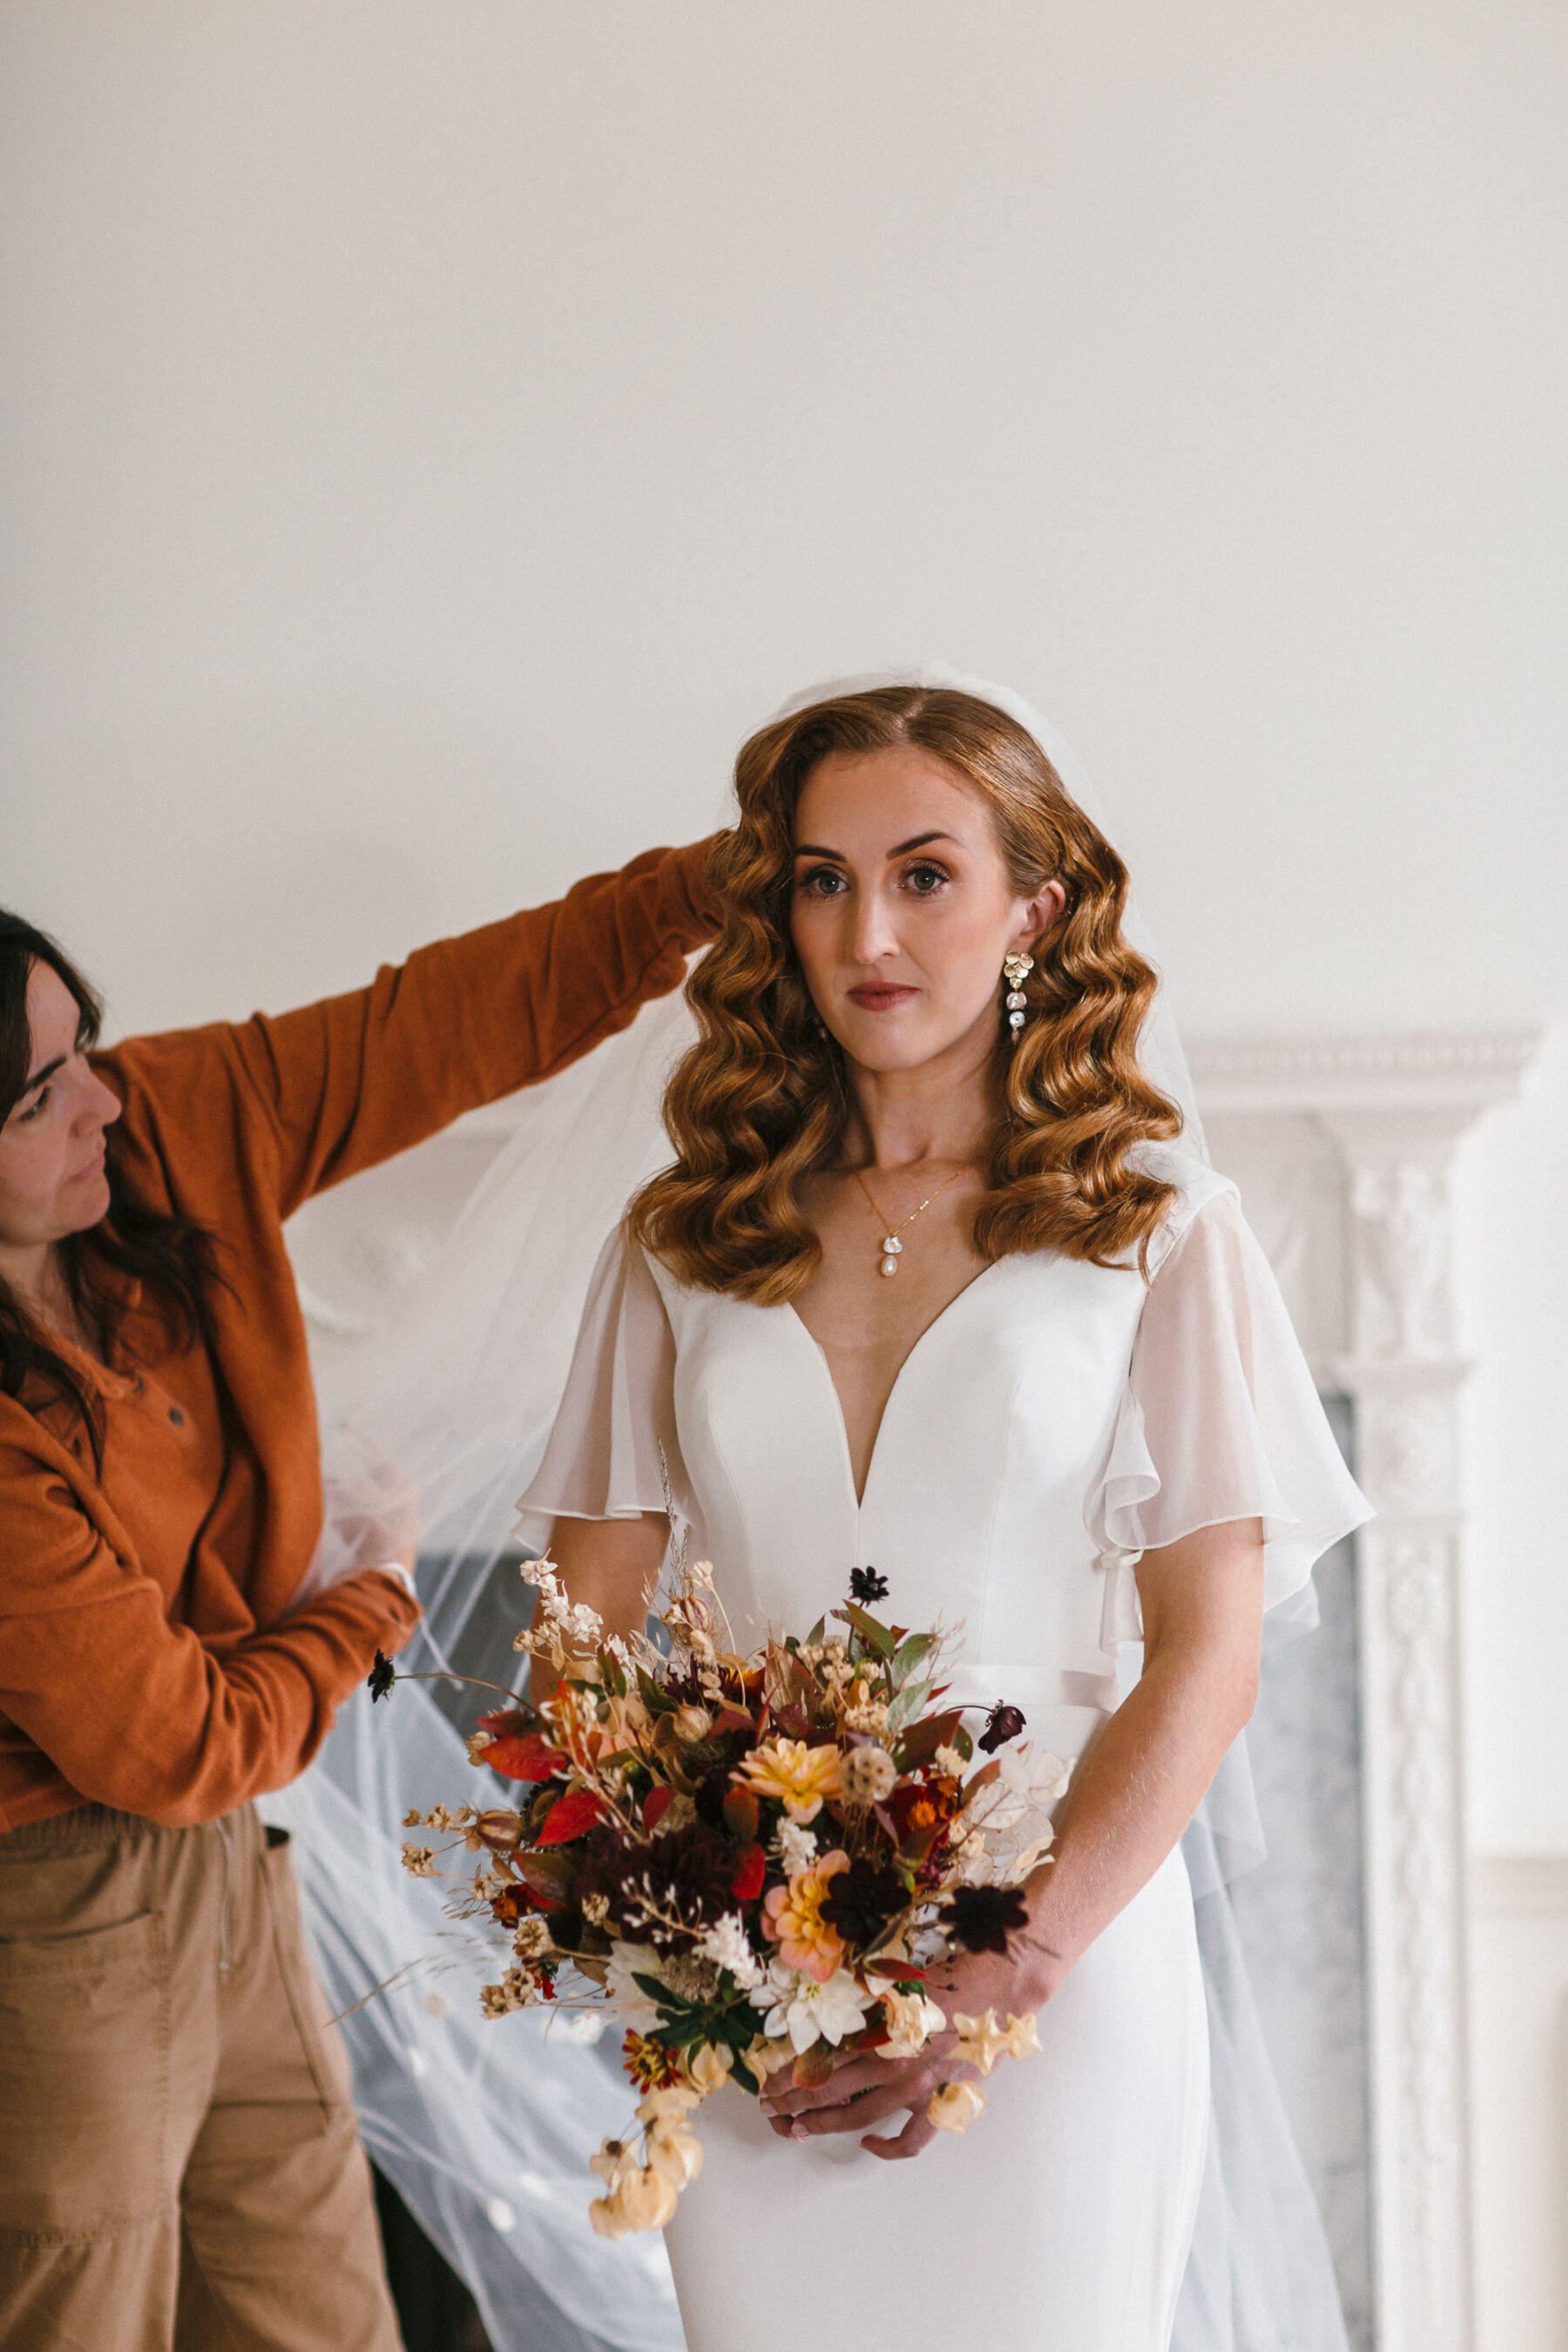 Modern bride with long wavy hair. Marcel waves, carrying an elegant Autumn wedding bouquet. 